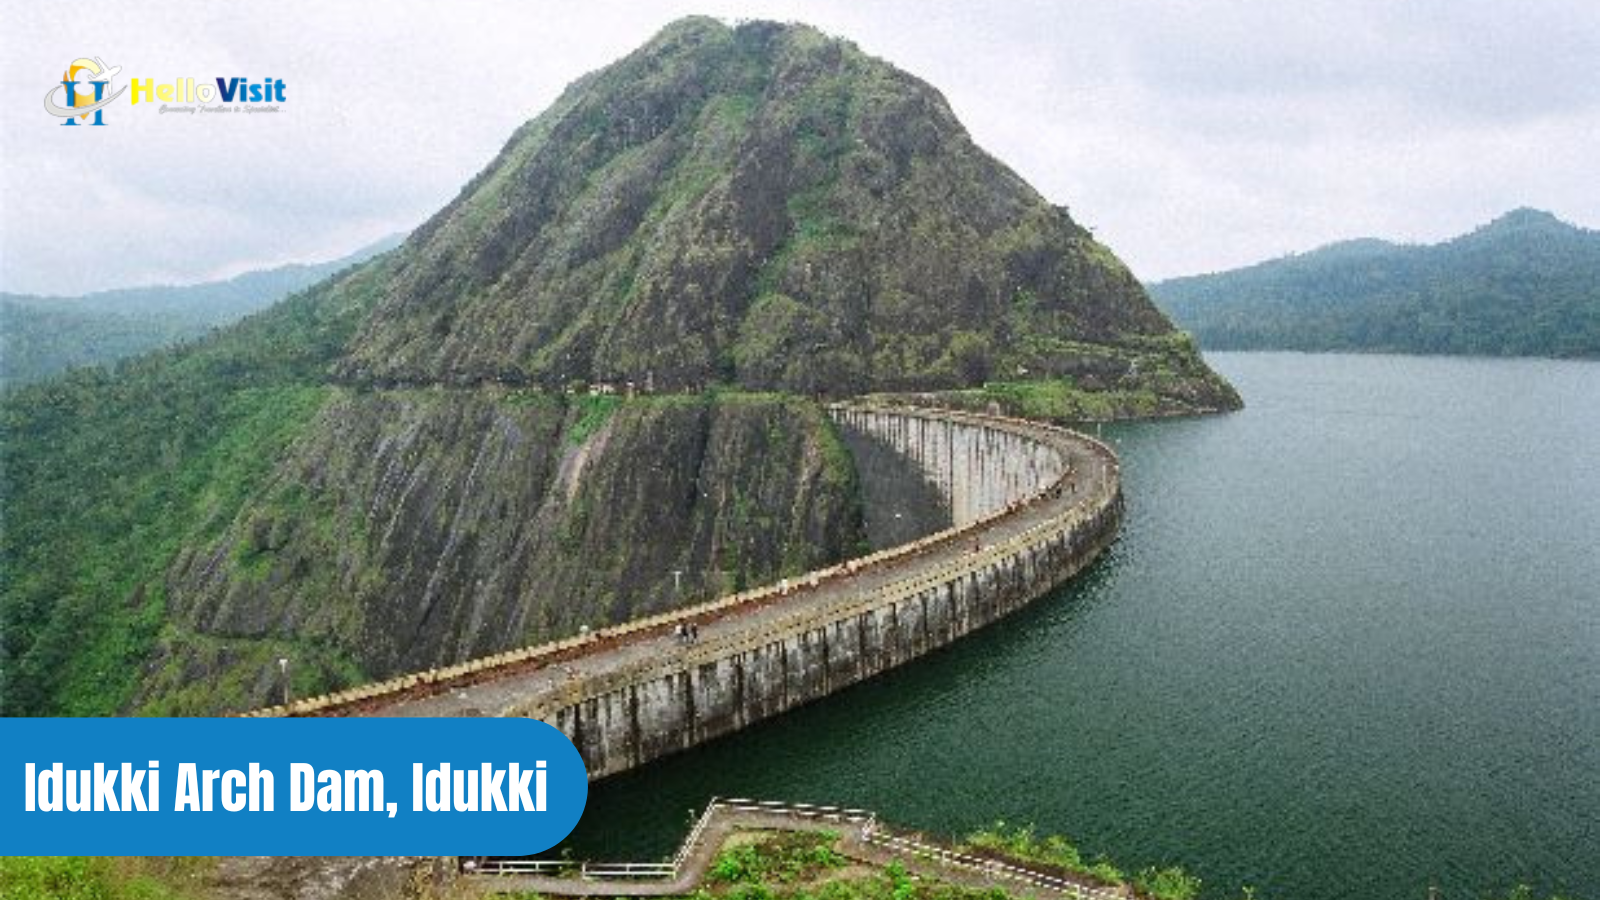 Idukki Arch Dam, Idukki